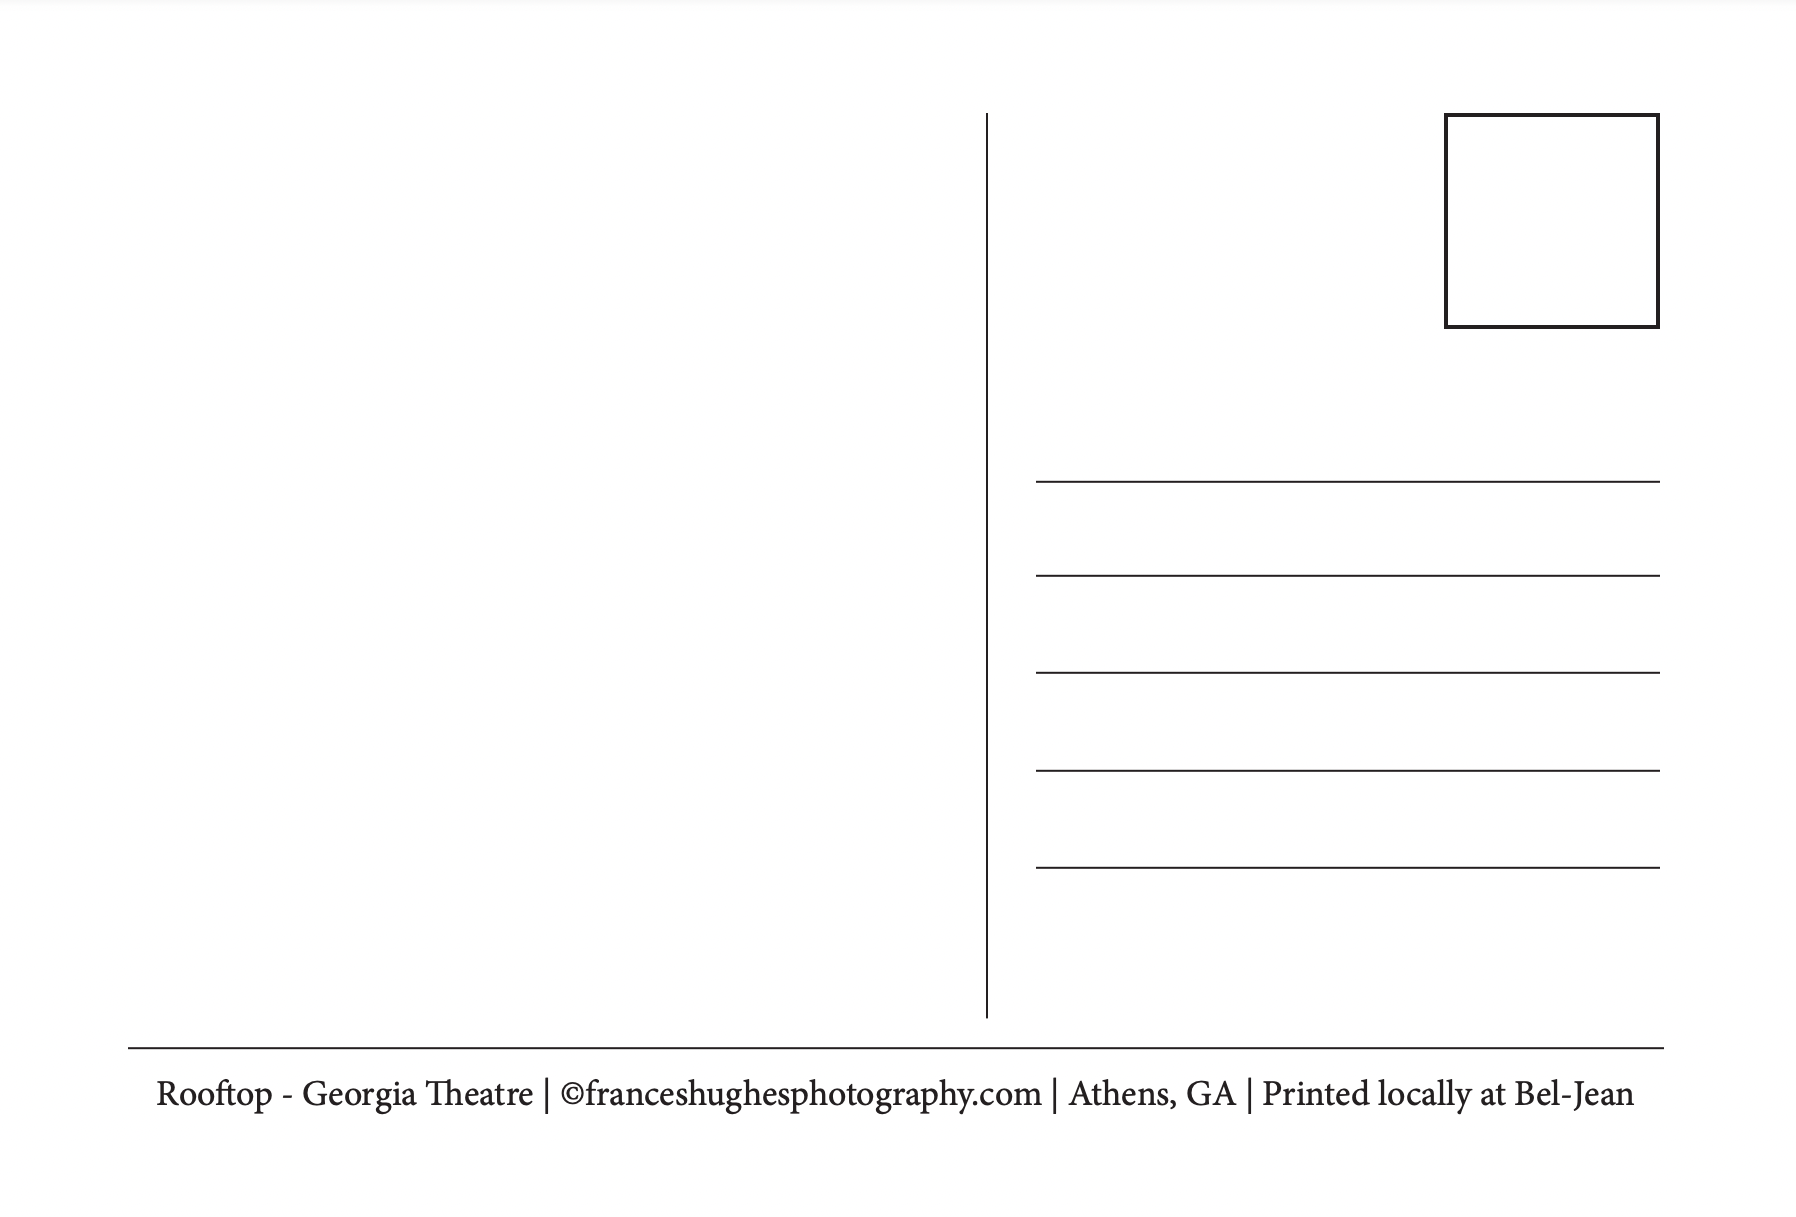 Athens, GA Postcards by Frances Hughes - Rooftop Bar Stool - by Frances Hughes - K. A. Artist Shop